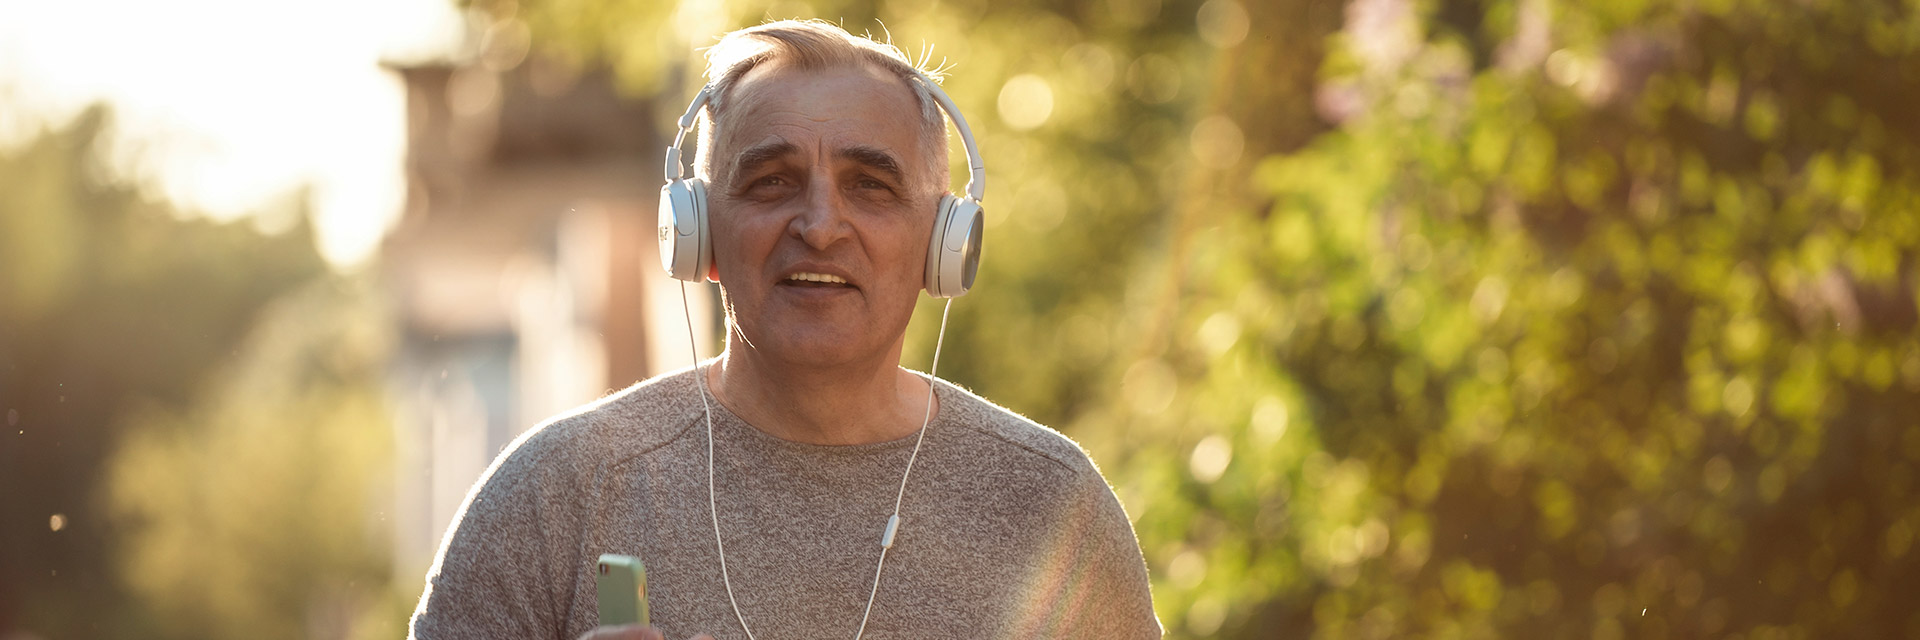 Man on headphones